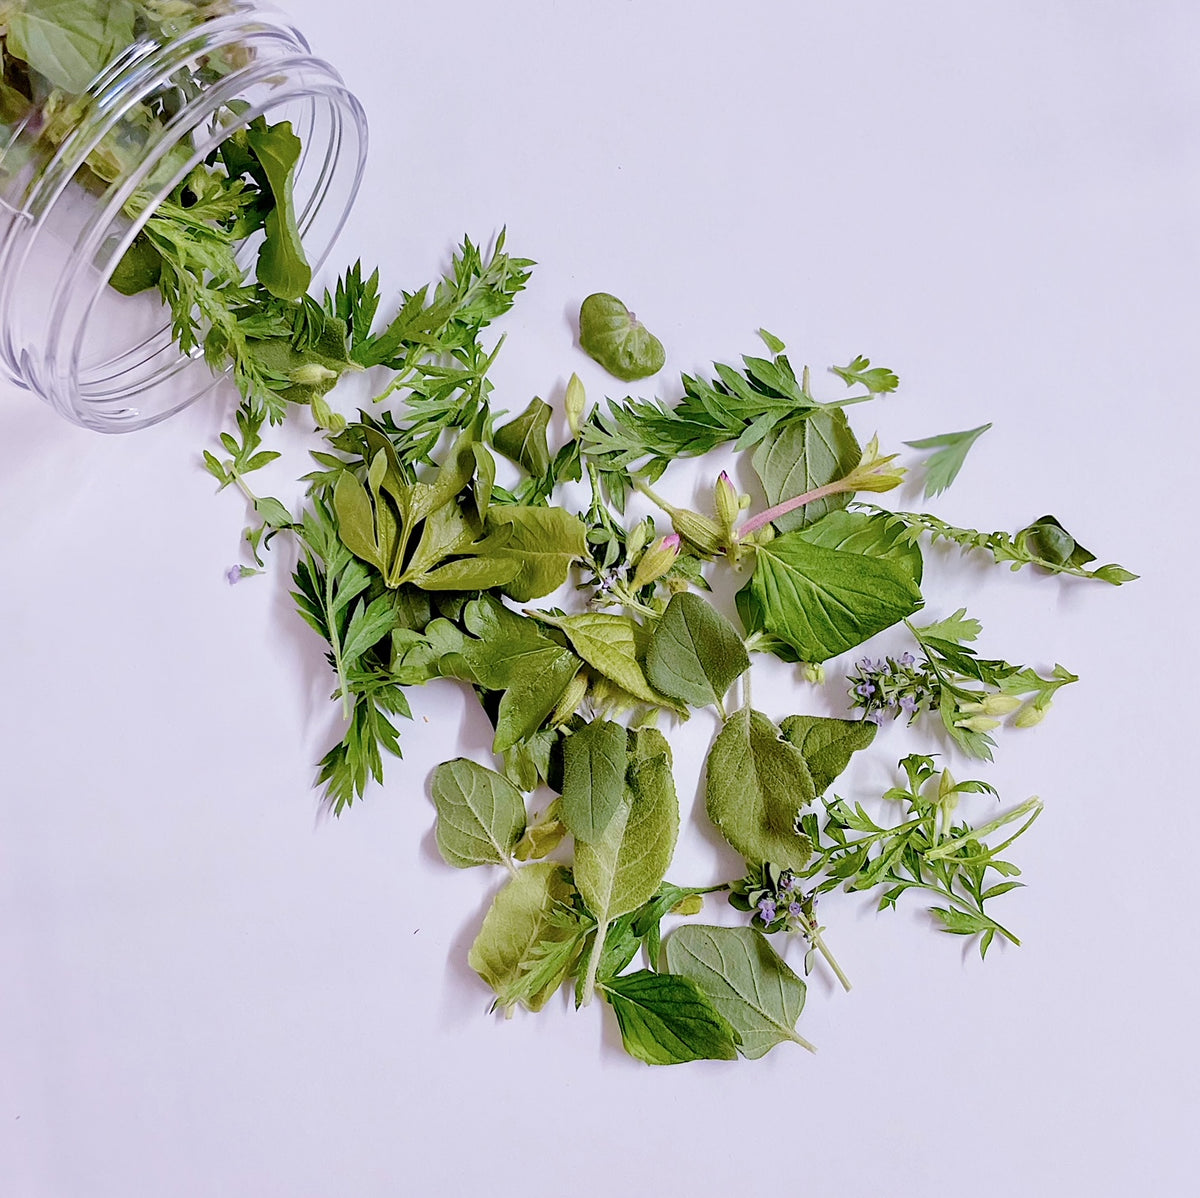 GREEN GODDESS FLOWERFETTI® - Freeze Dried Edible Flower Confetti